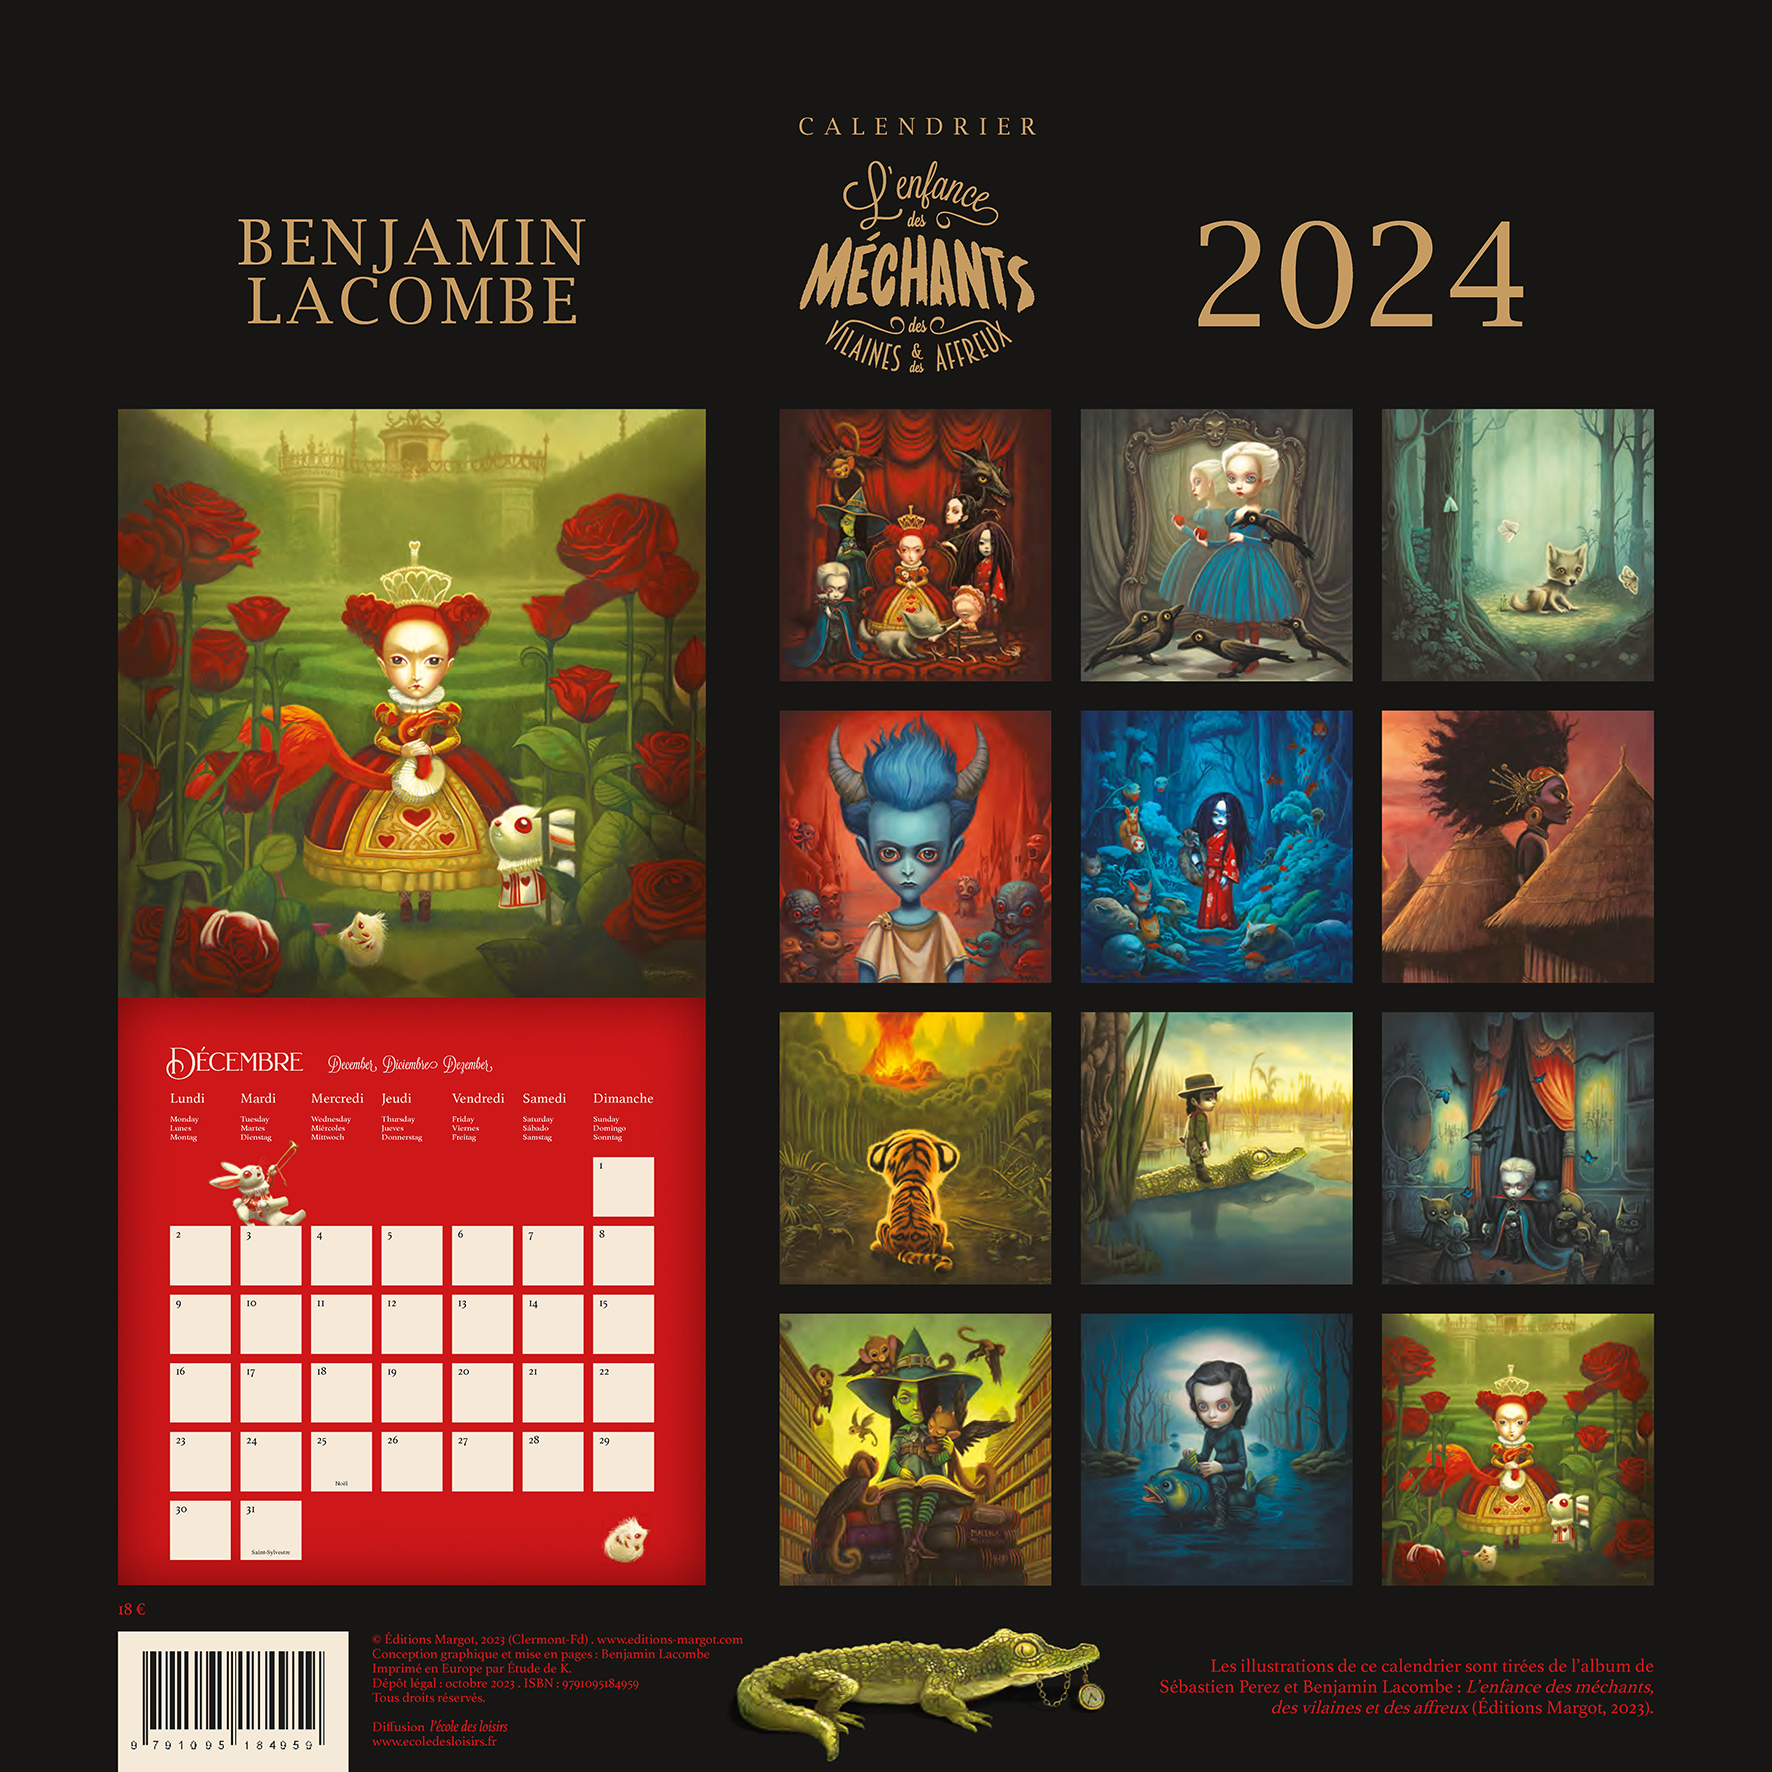 Calendrier 2024 - Benjamin Lacombe - Lacombe, Benjamin - La Compagnie des  Livres